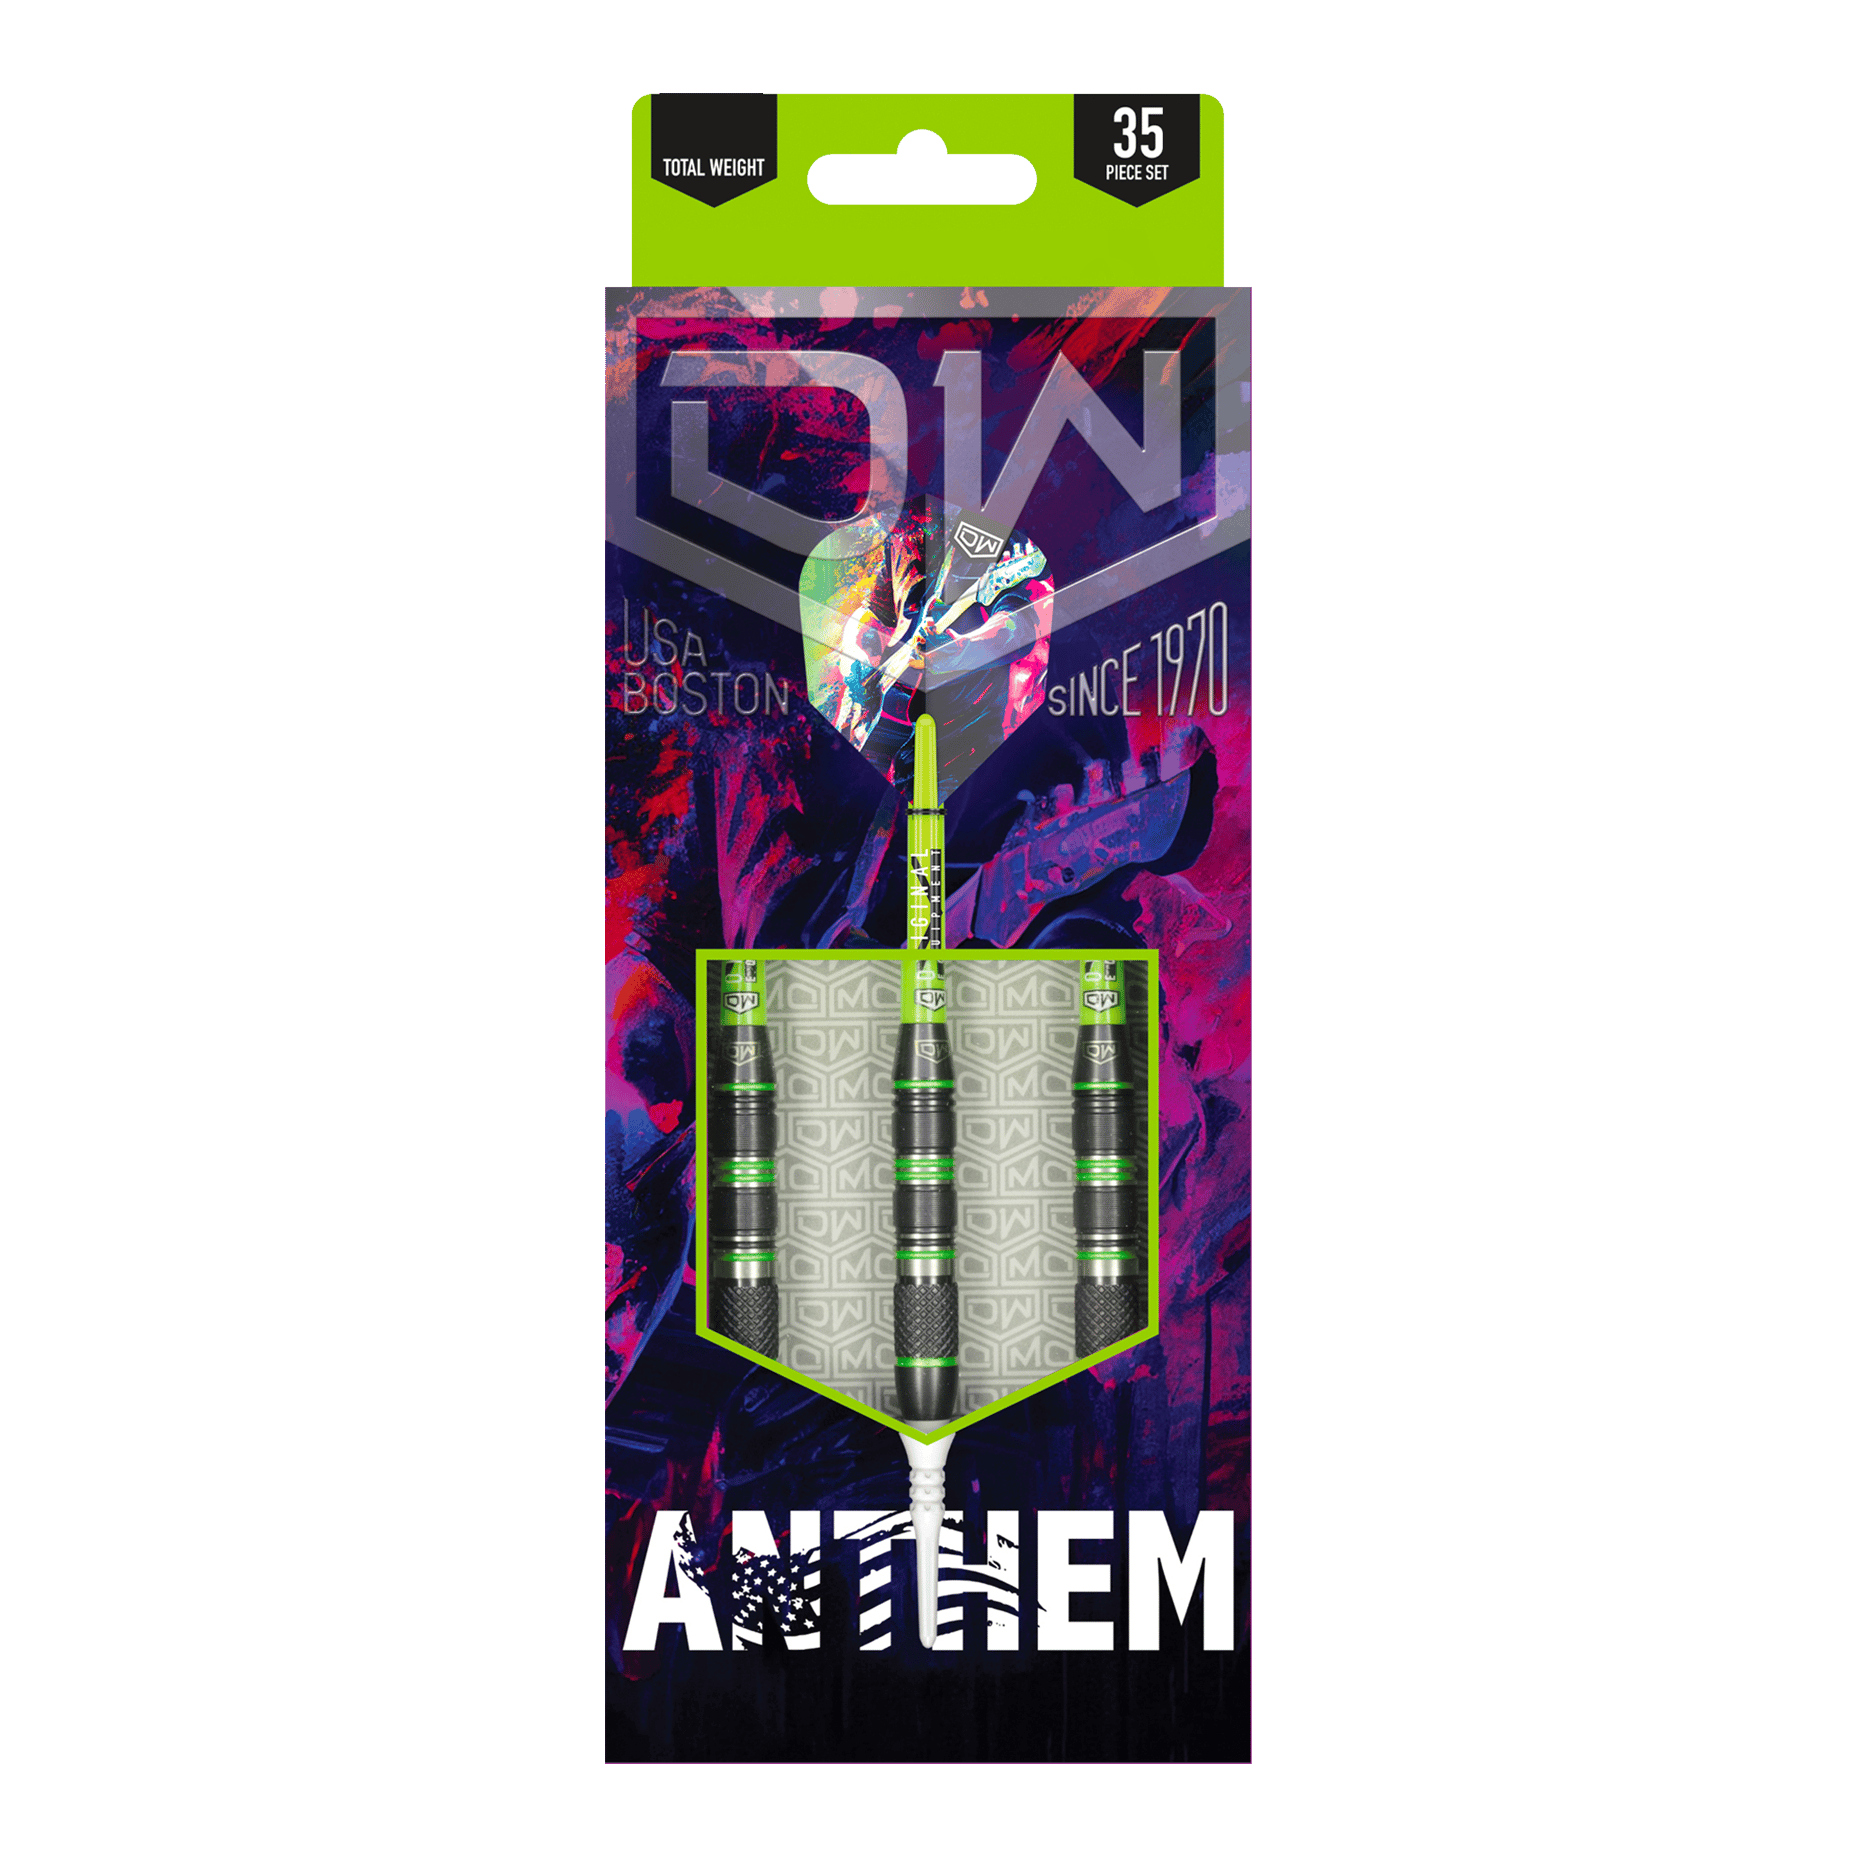 DW Anthem soft darts - 18g